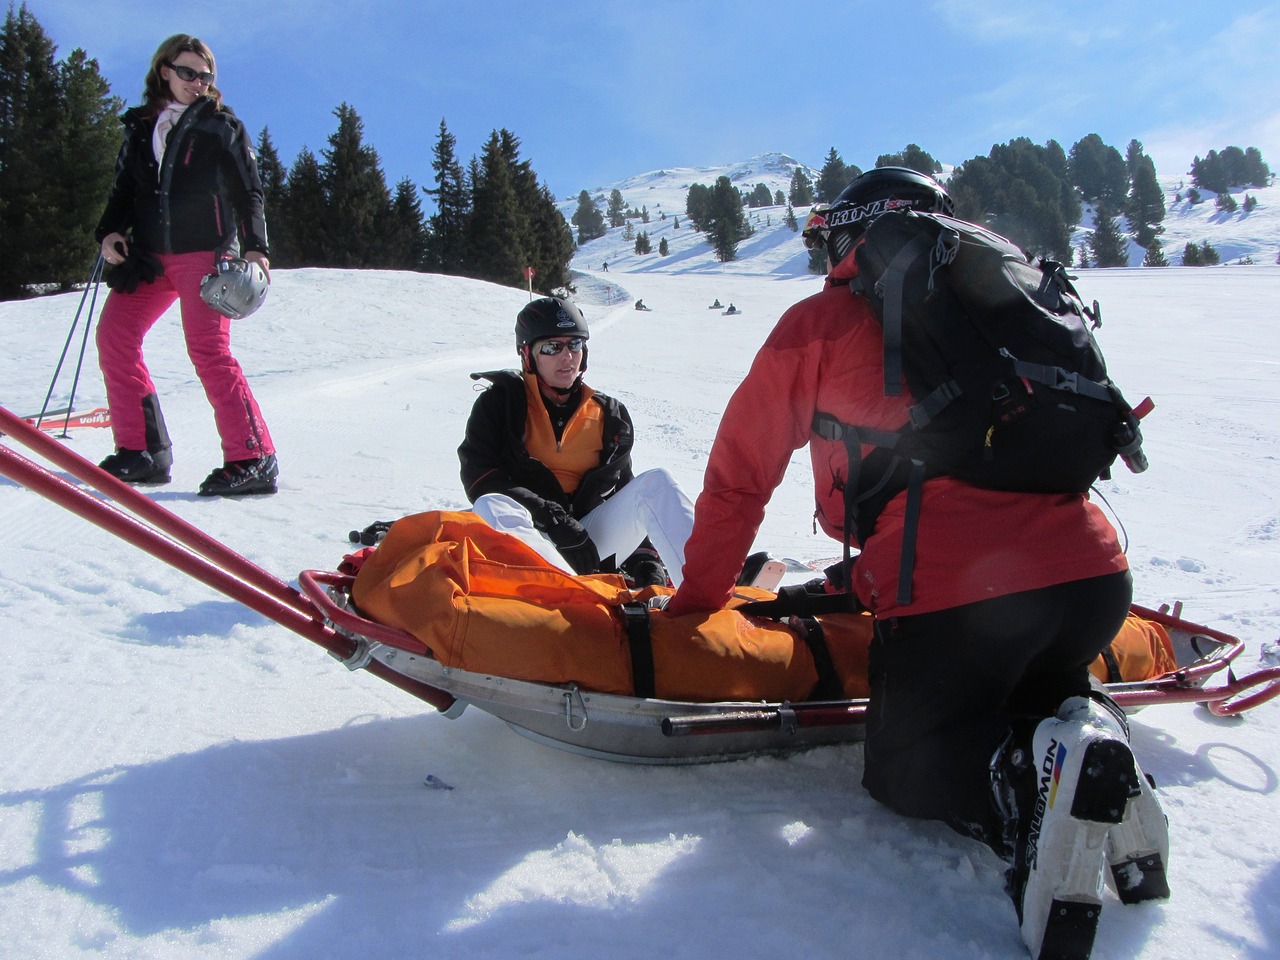 Skiunfall, Freizeitunfälle, UNIQA-Experteninterview: Jagdfakten.at informiert